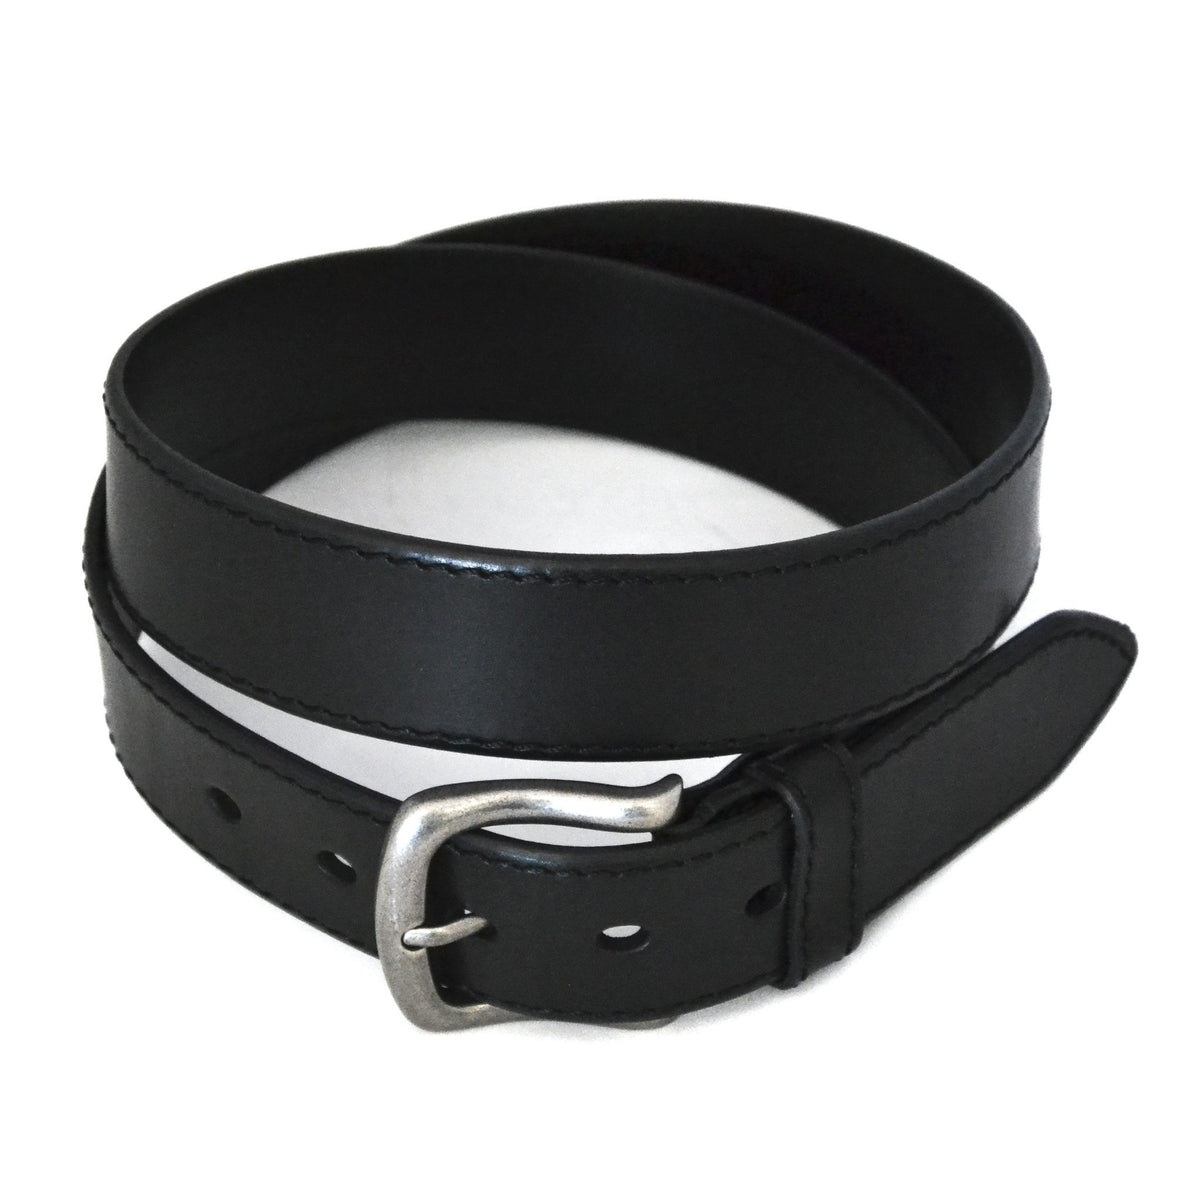 DERBY - Mens Black Genuine Leather Belt  - Belt N Bags